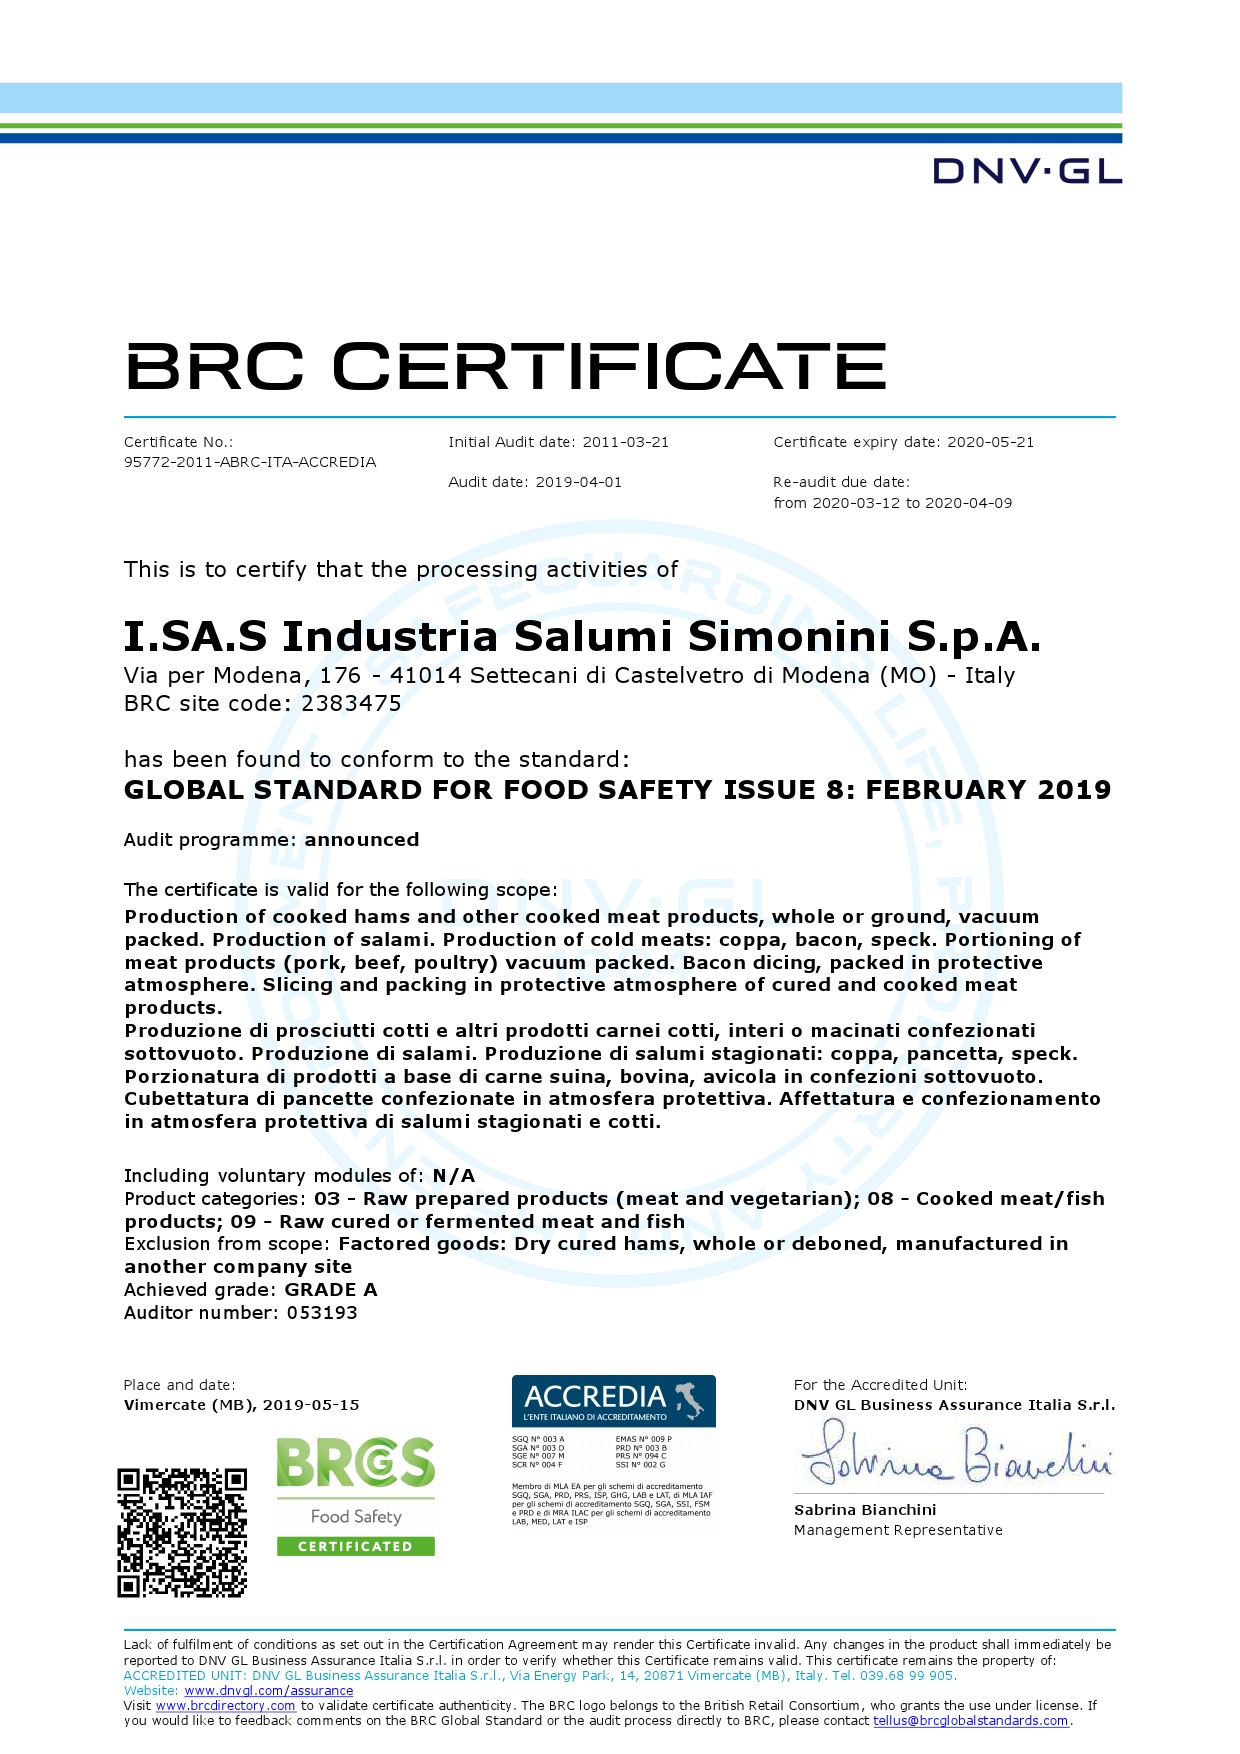 Certificato BRC 2019 - Cert 95772-2011-ABRC-ITA-ACCREDIA rev7 (1)-1.jpg